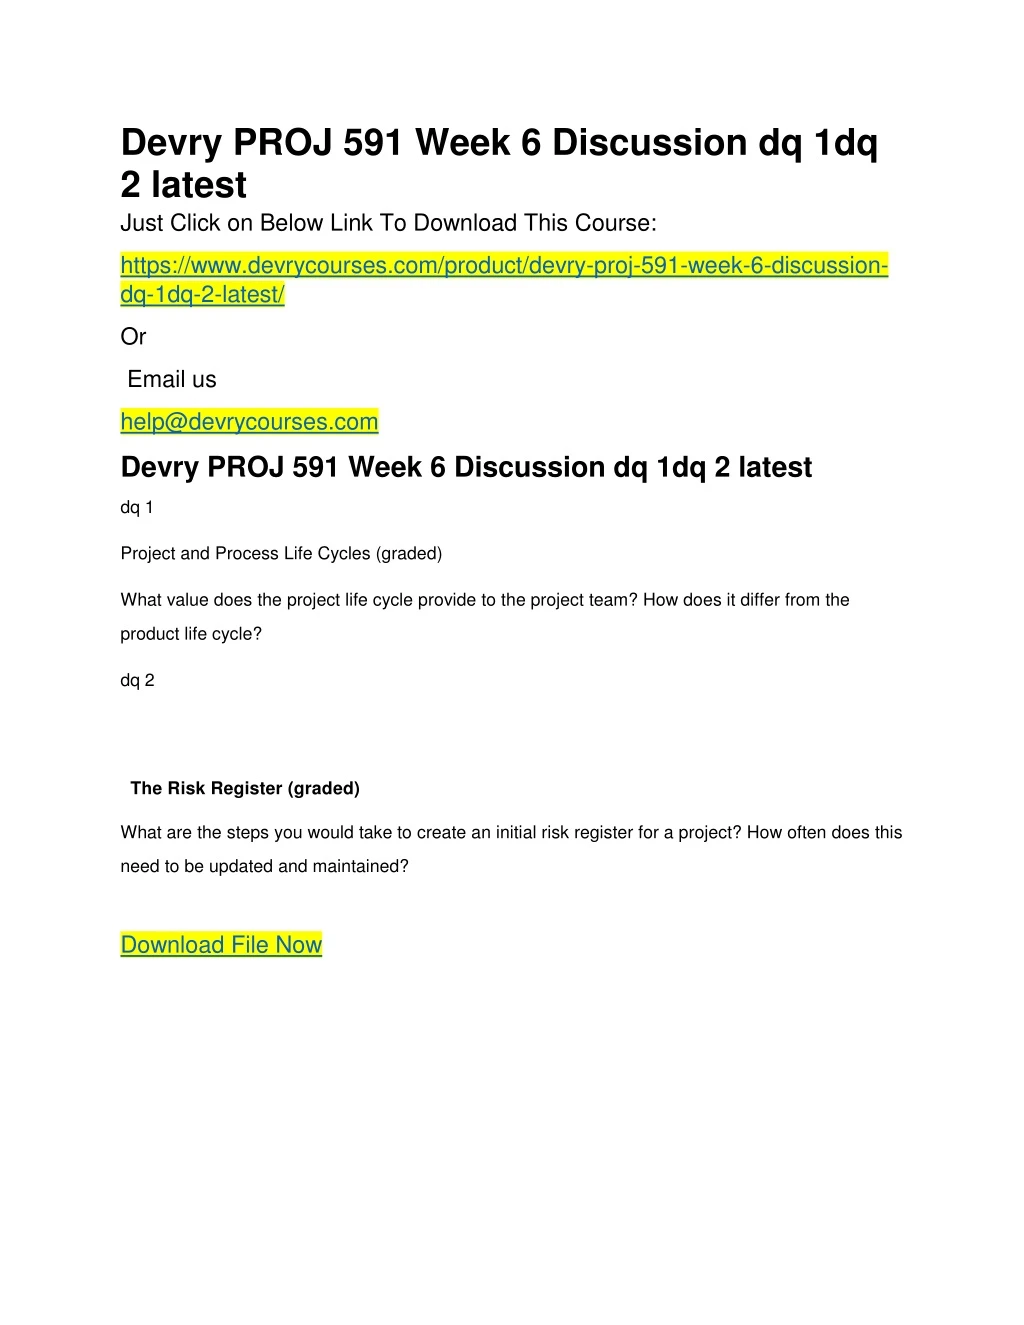 devry proj 591 week 6 discussion dq 1dq 2 latest